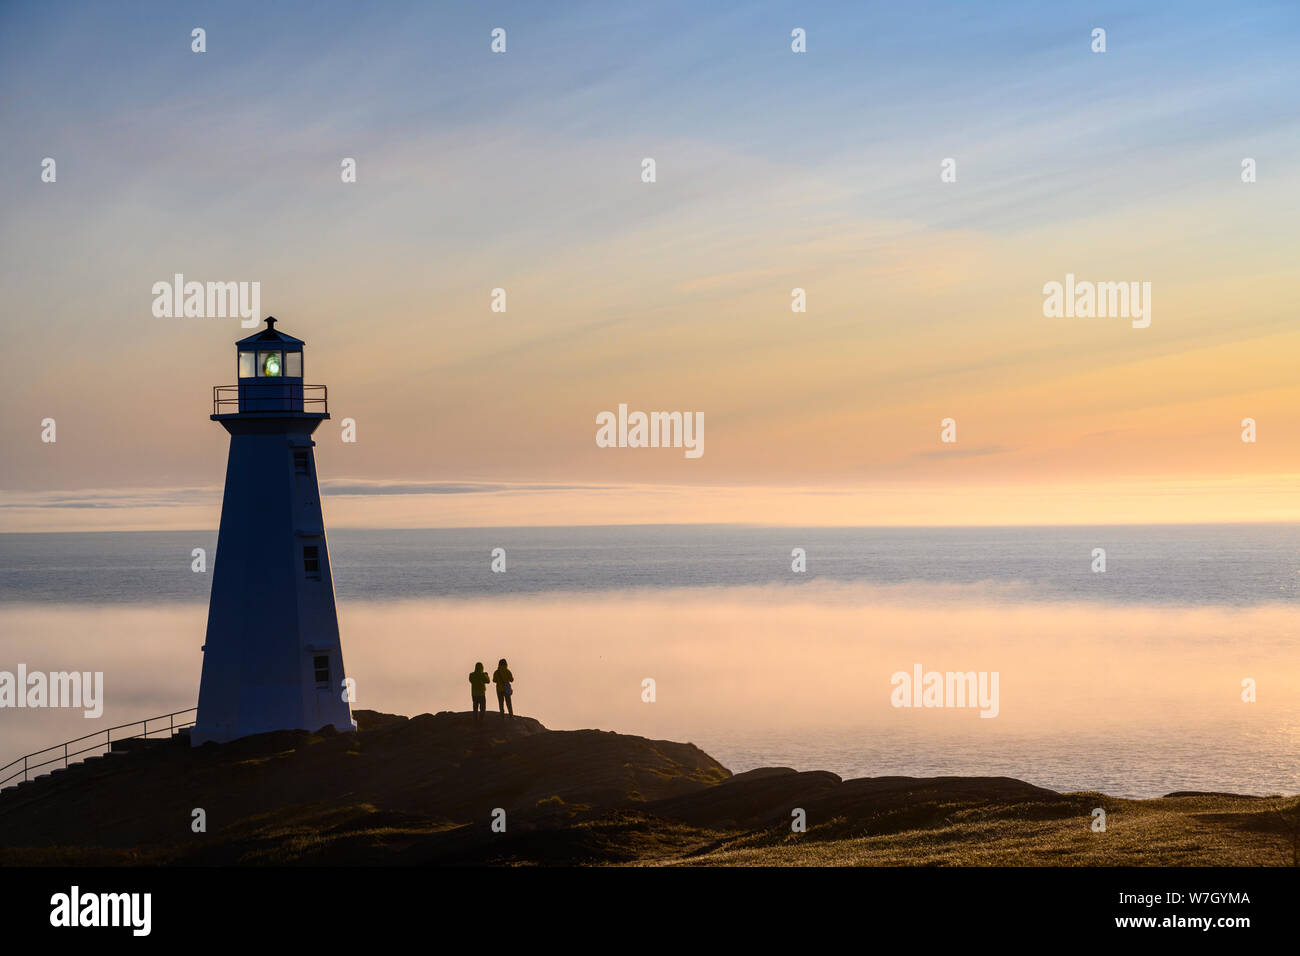 Besucher am Cape Spear Leuchtturm mit Nebelbank über dem Atlantik; St. John's, Neufundland, Kanada. Stockfoto